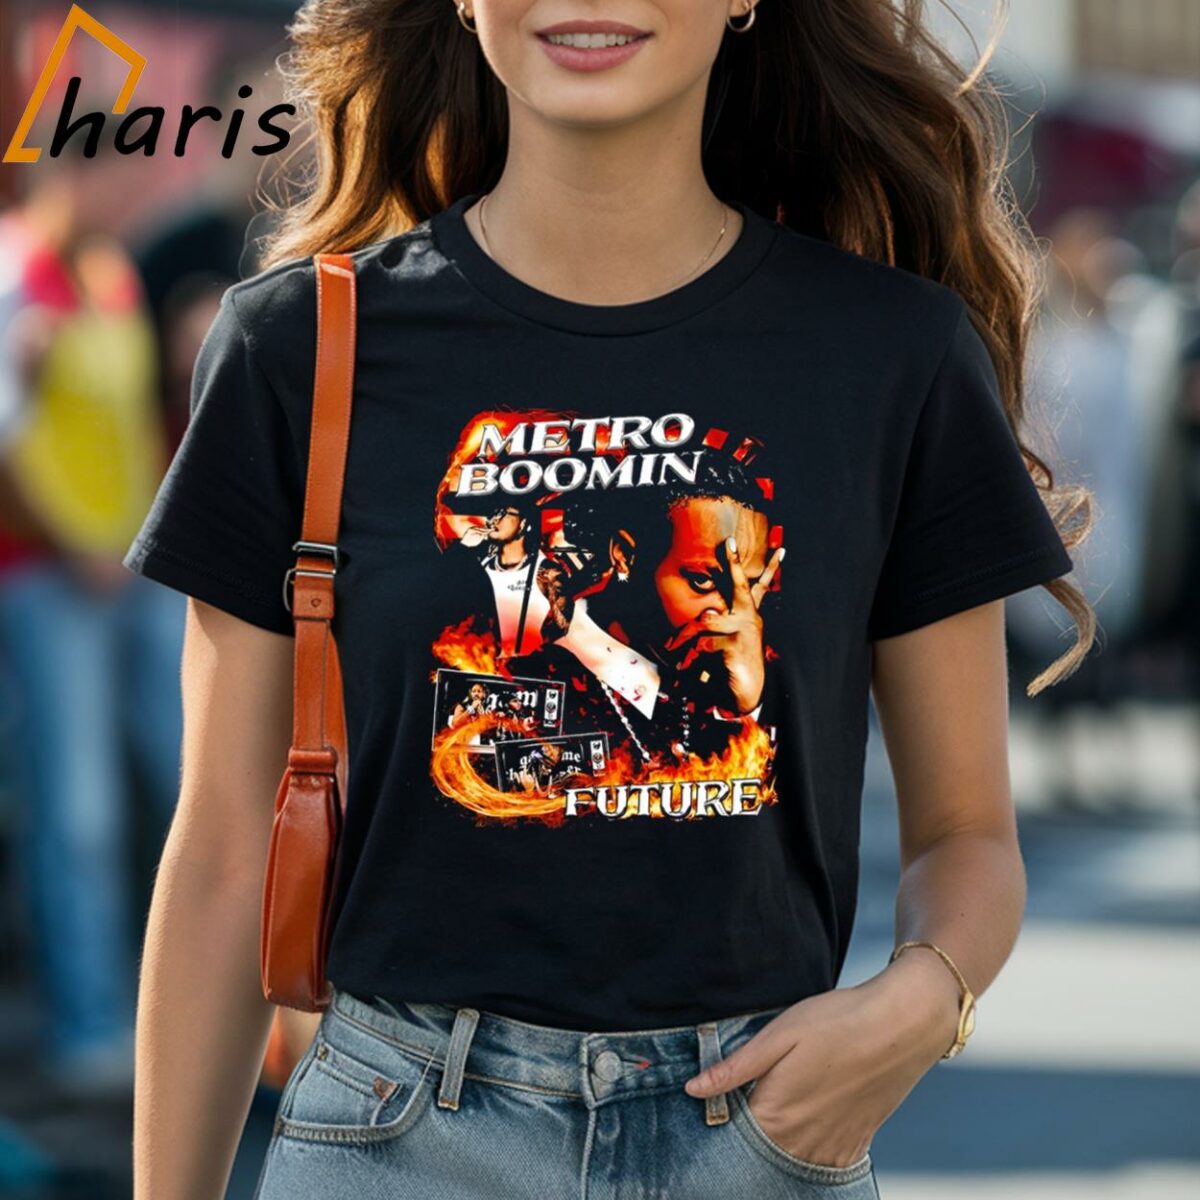 Metro Boomin x Future Graphic Shirt 1 Shirt